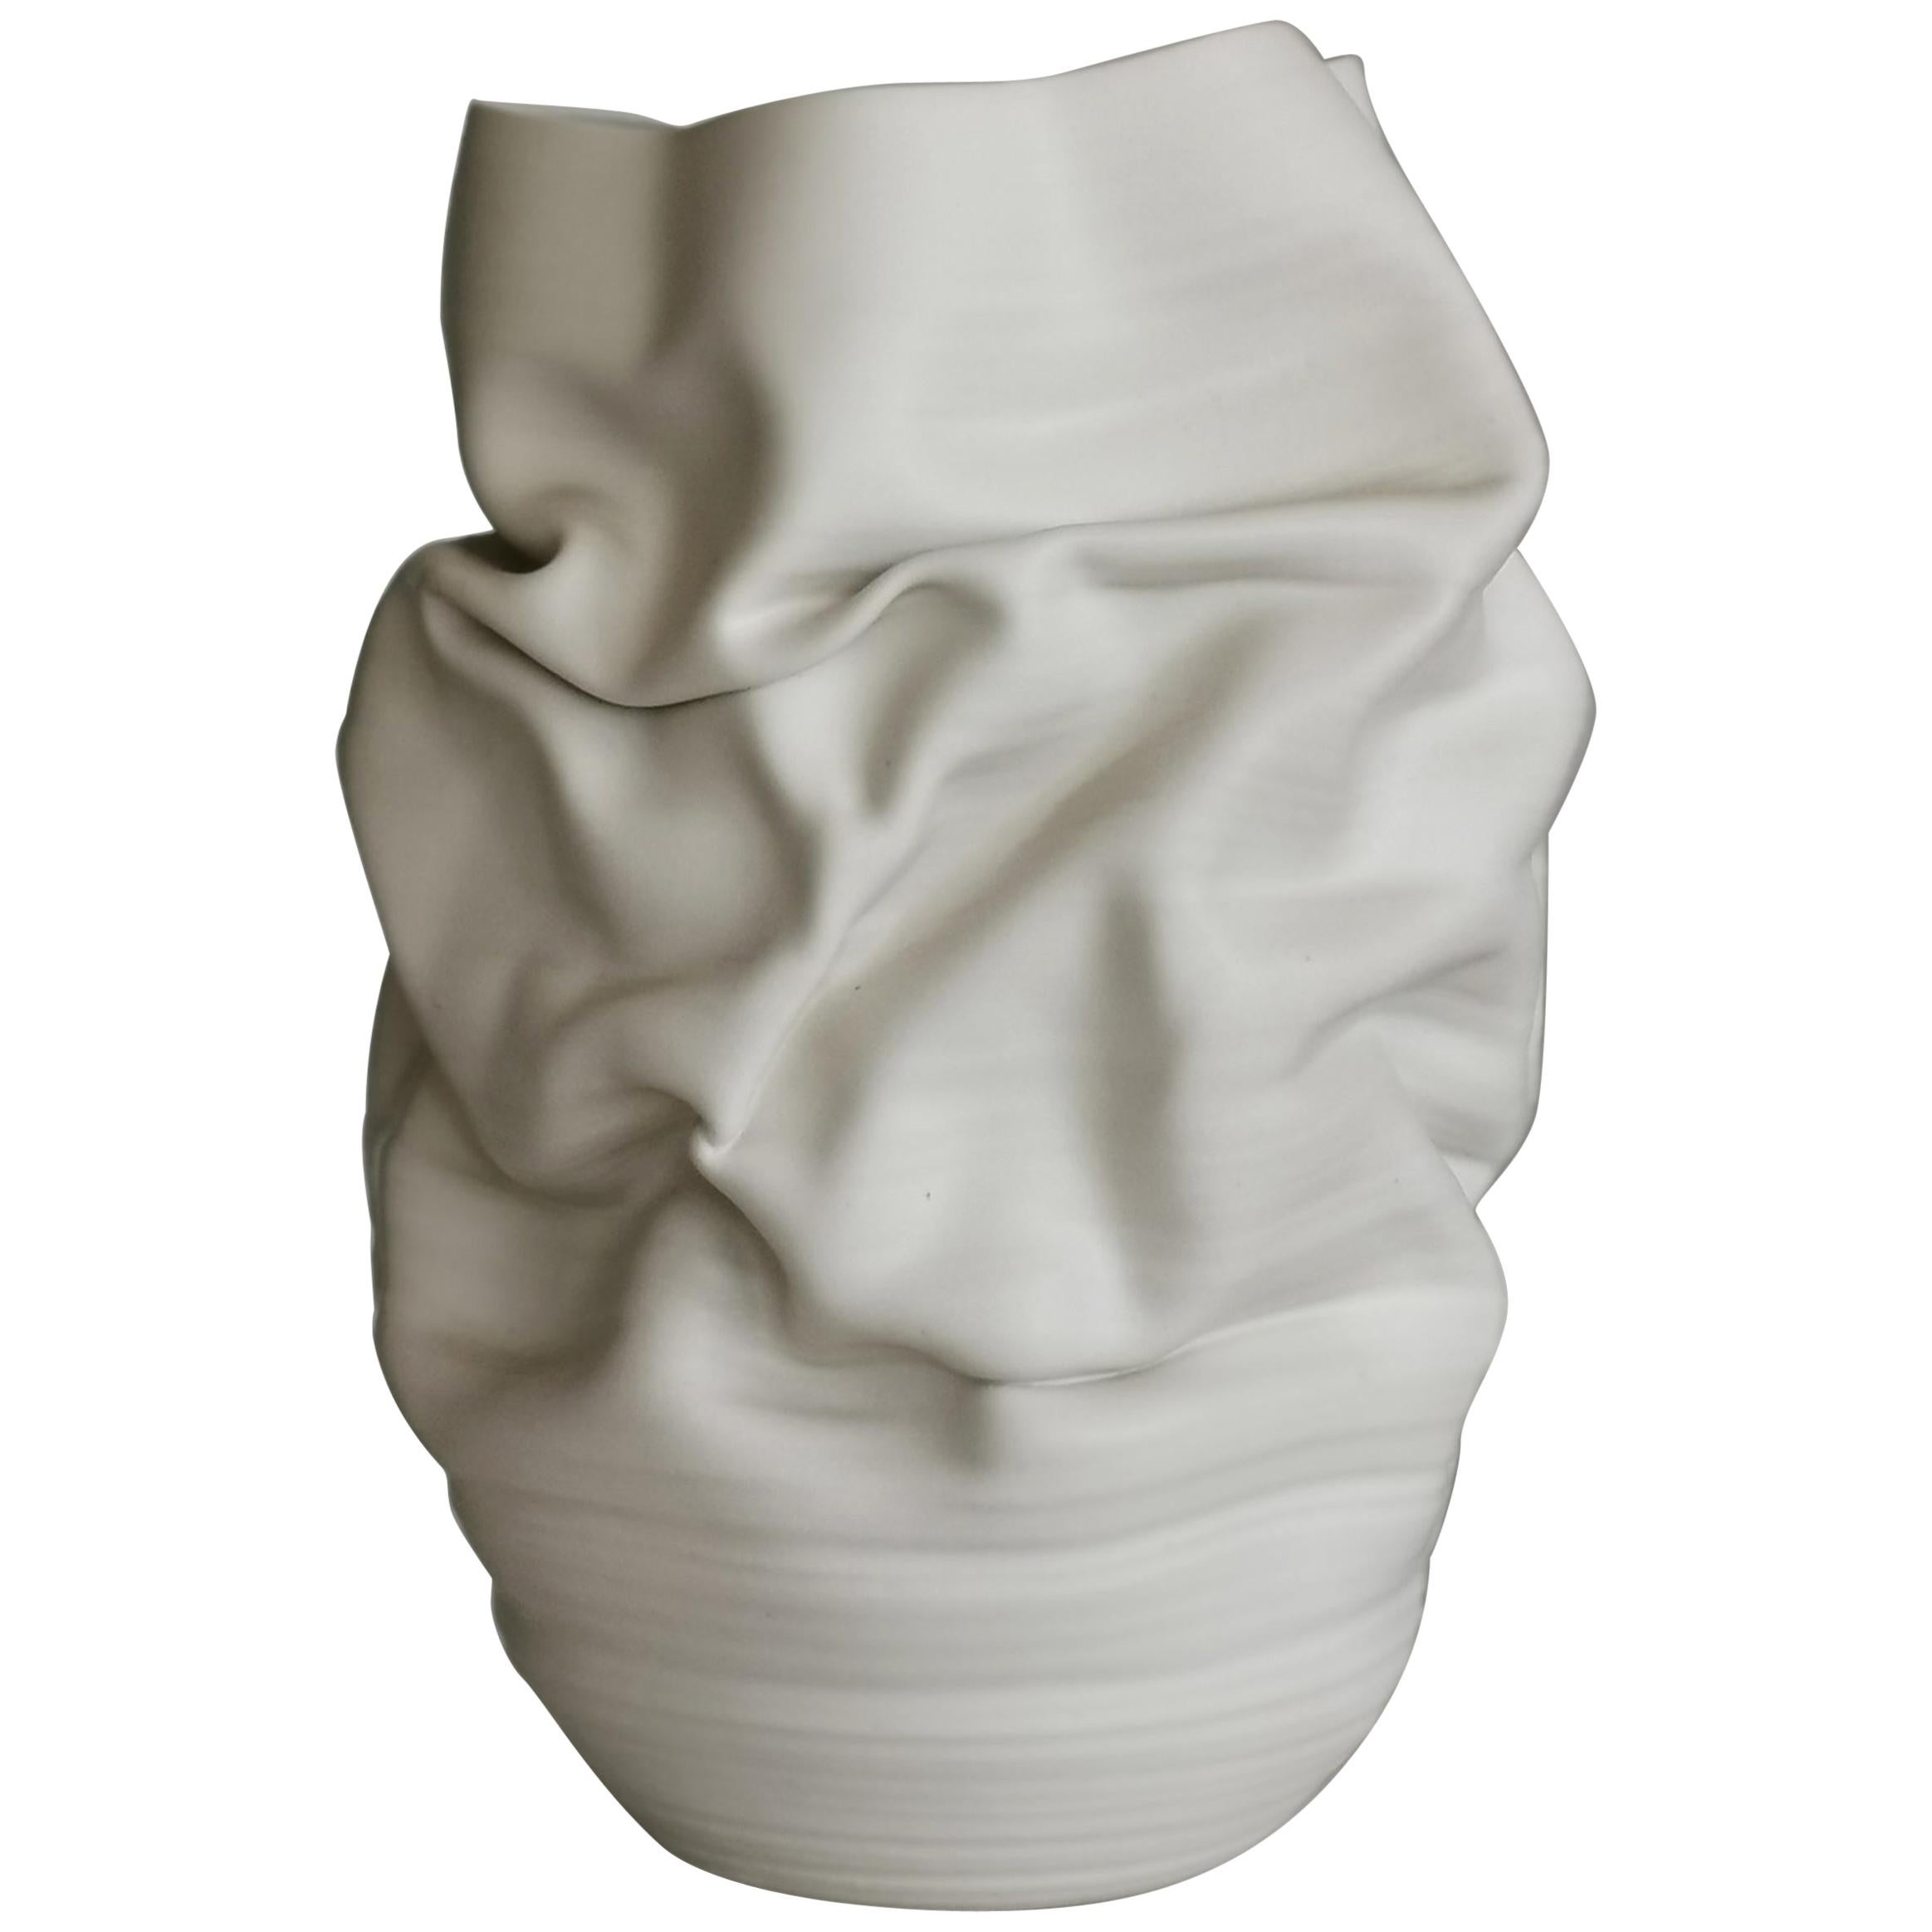 White Deflated Crumpled Form, Vase, Interior Sculpture or Vessel, Objet D'Art